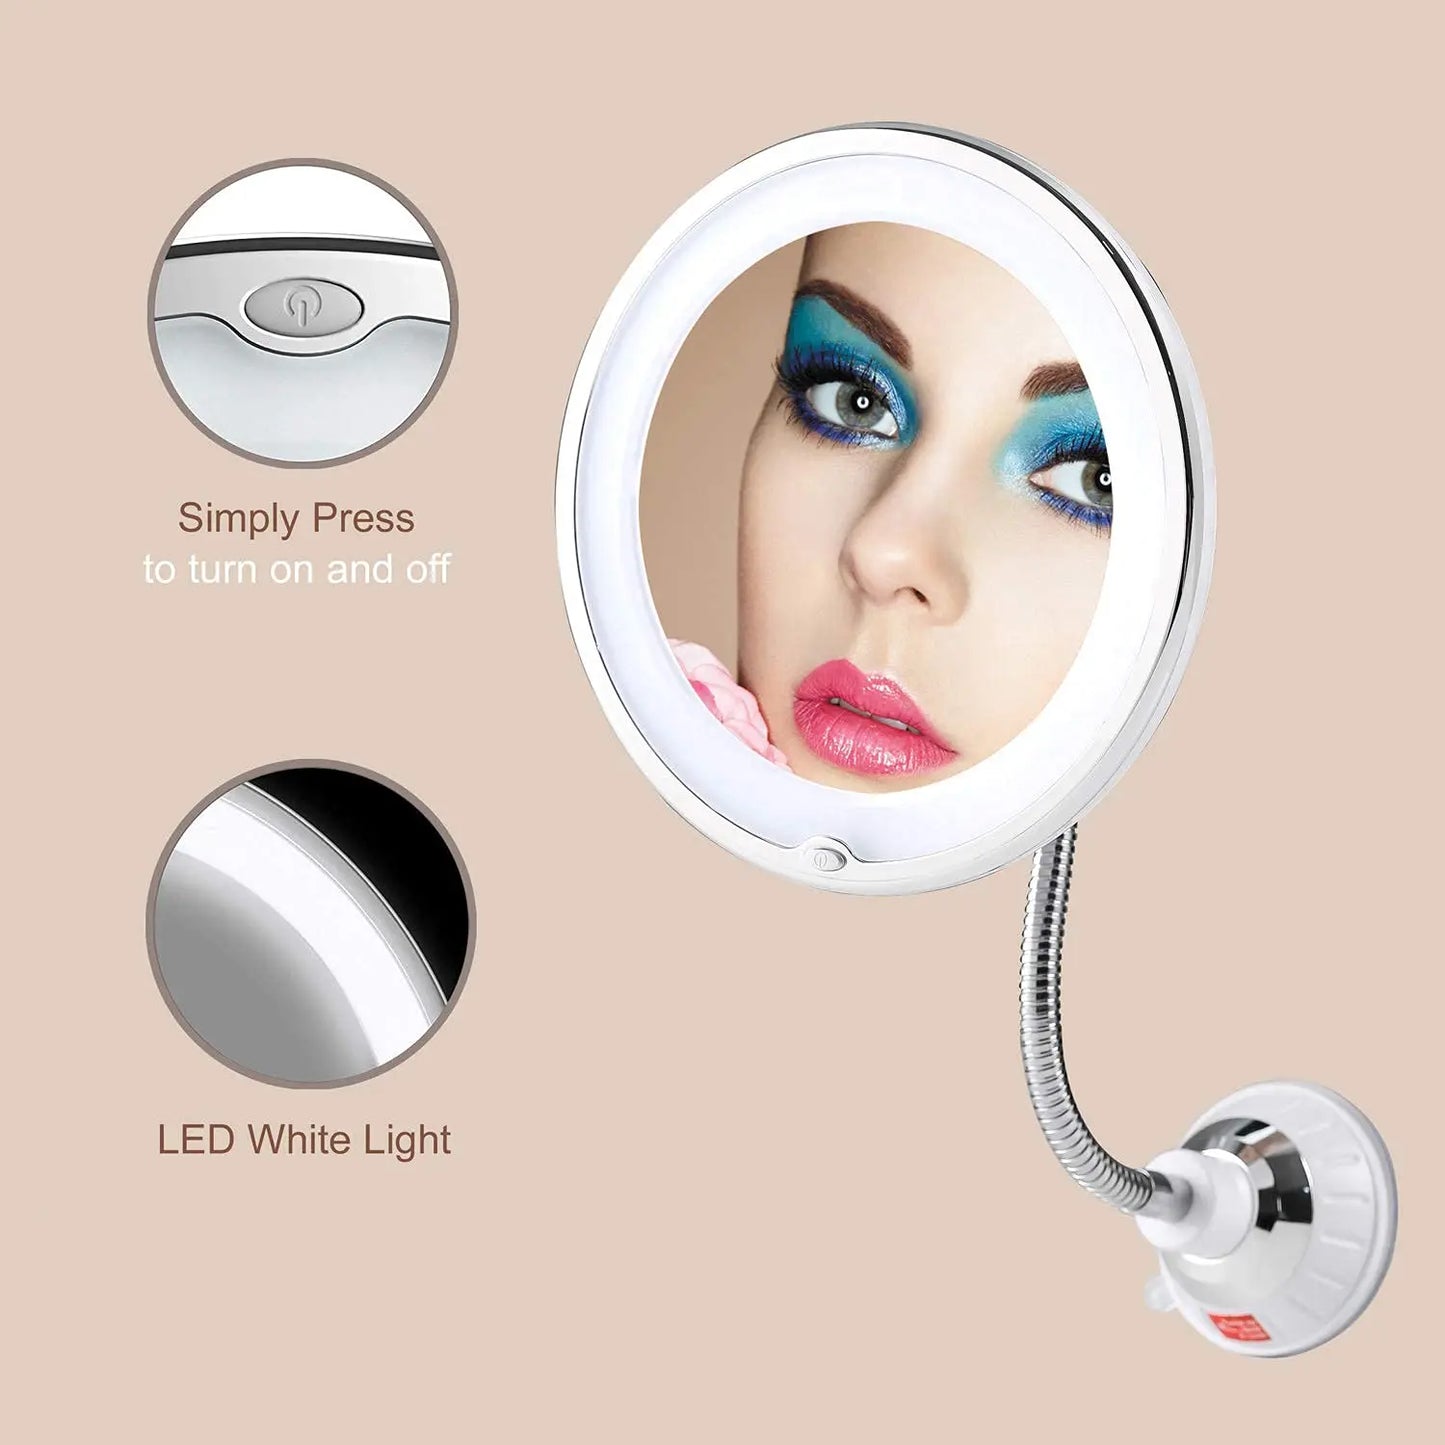 LED Lighted Makeup Mirror - Bathroom Magnification Vanity Mirror